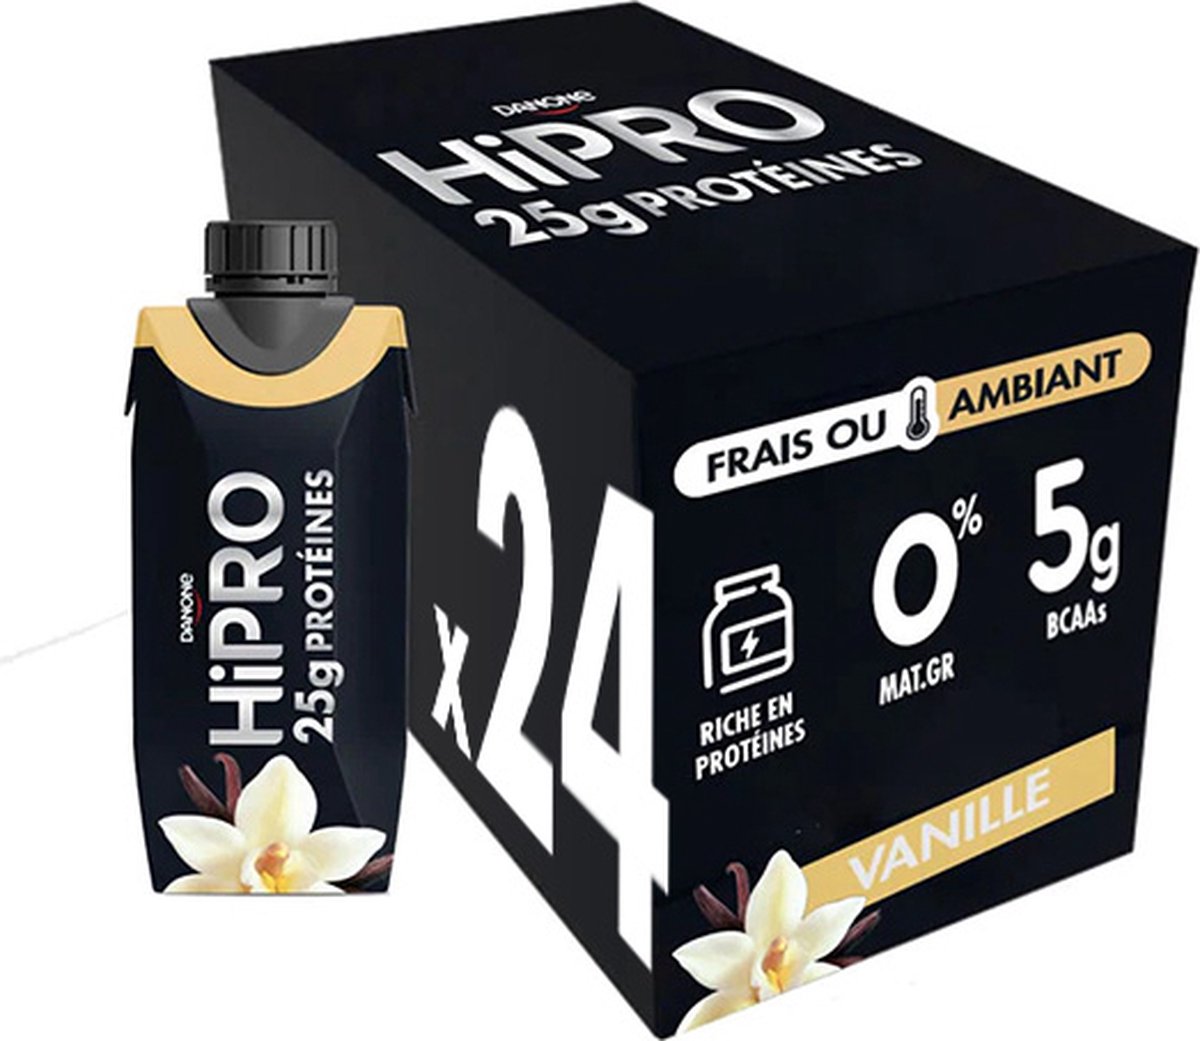 Danone HiPro - Proteïne drank - Vanille - Sportdrank 0% mg - Niet gekoelde brikje met vanillesmaak 25g proteïne - 24 x 330 ml